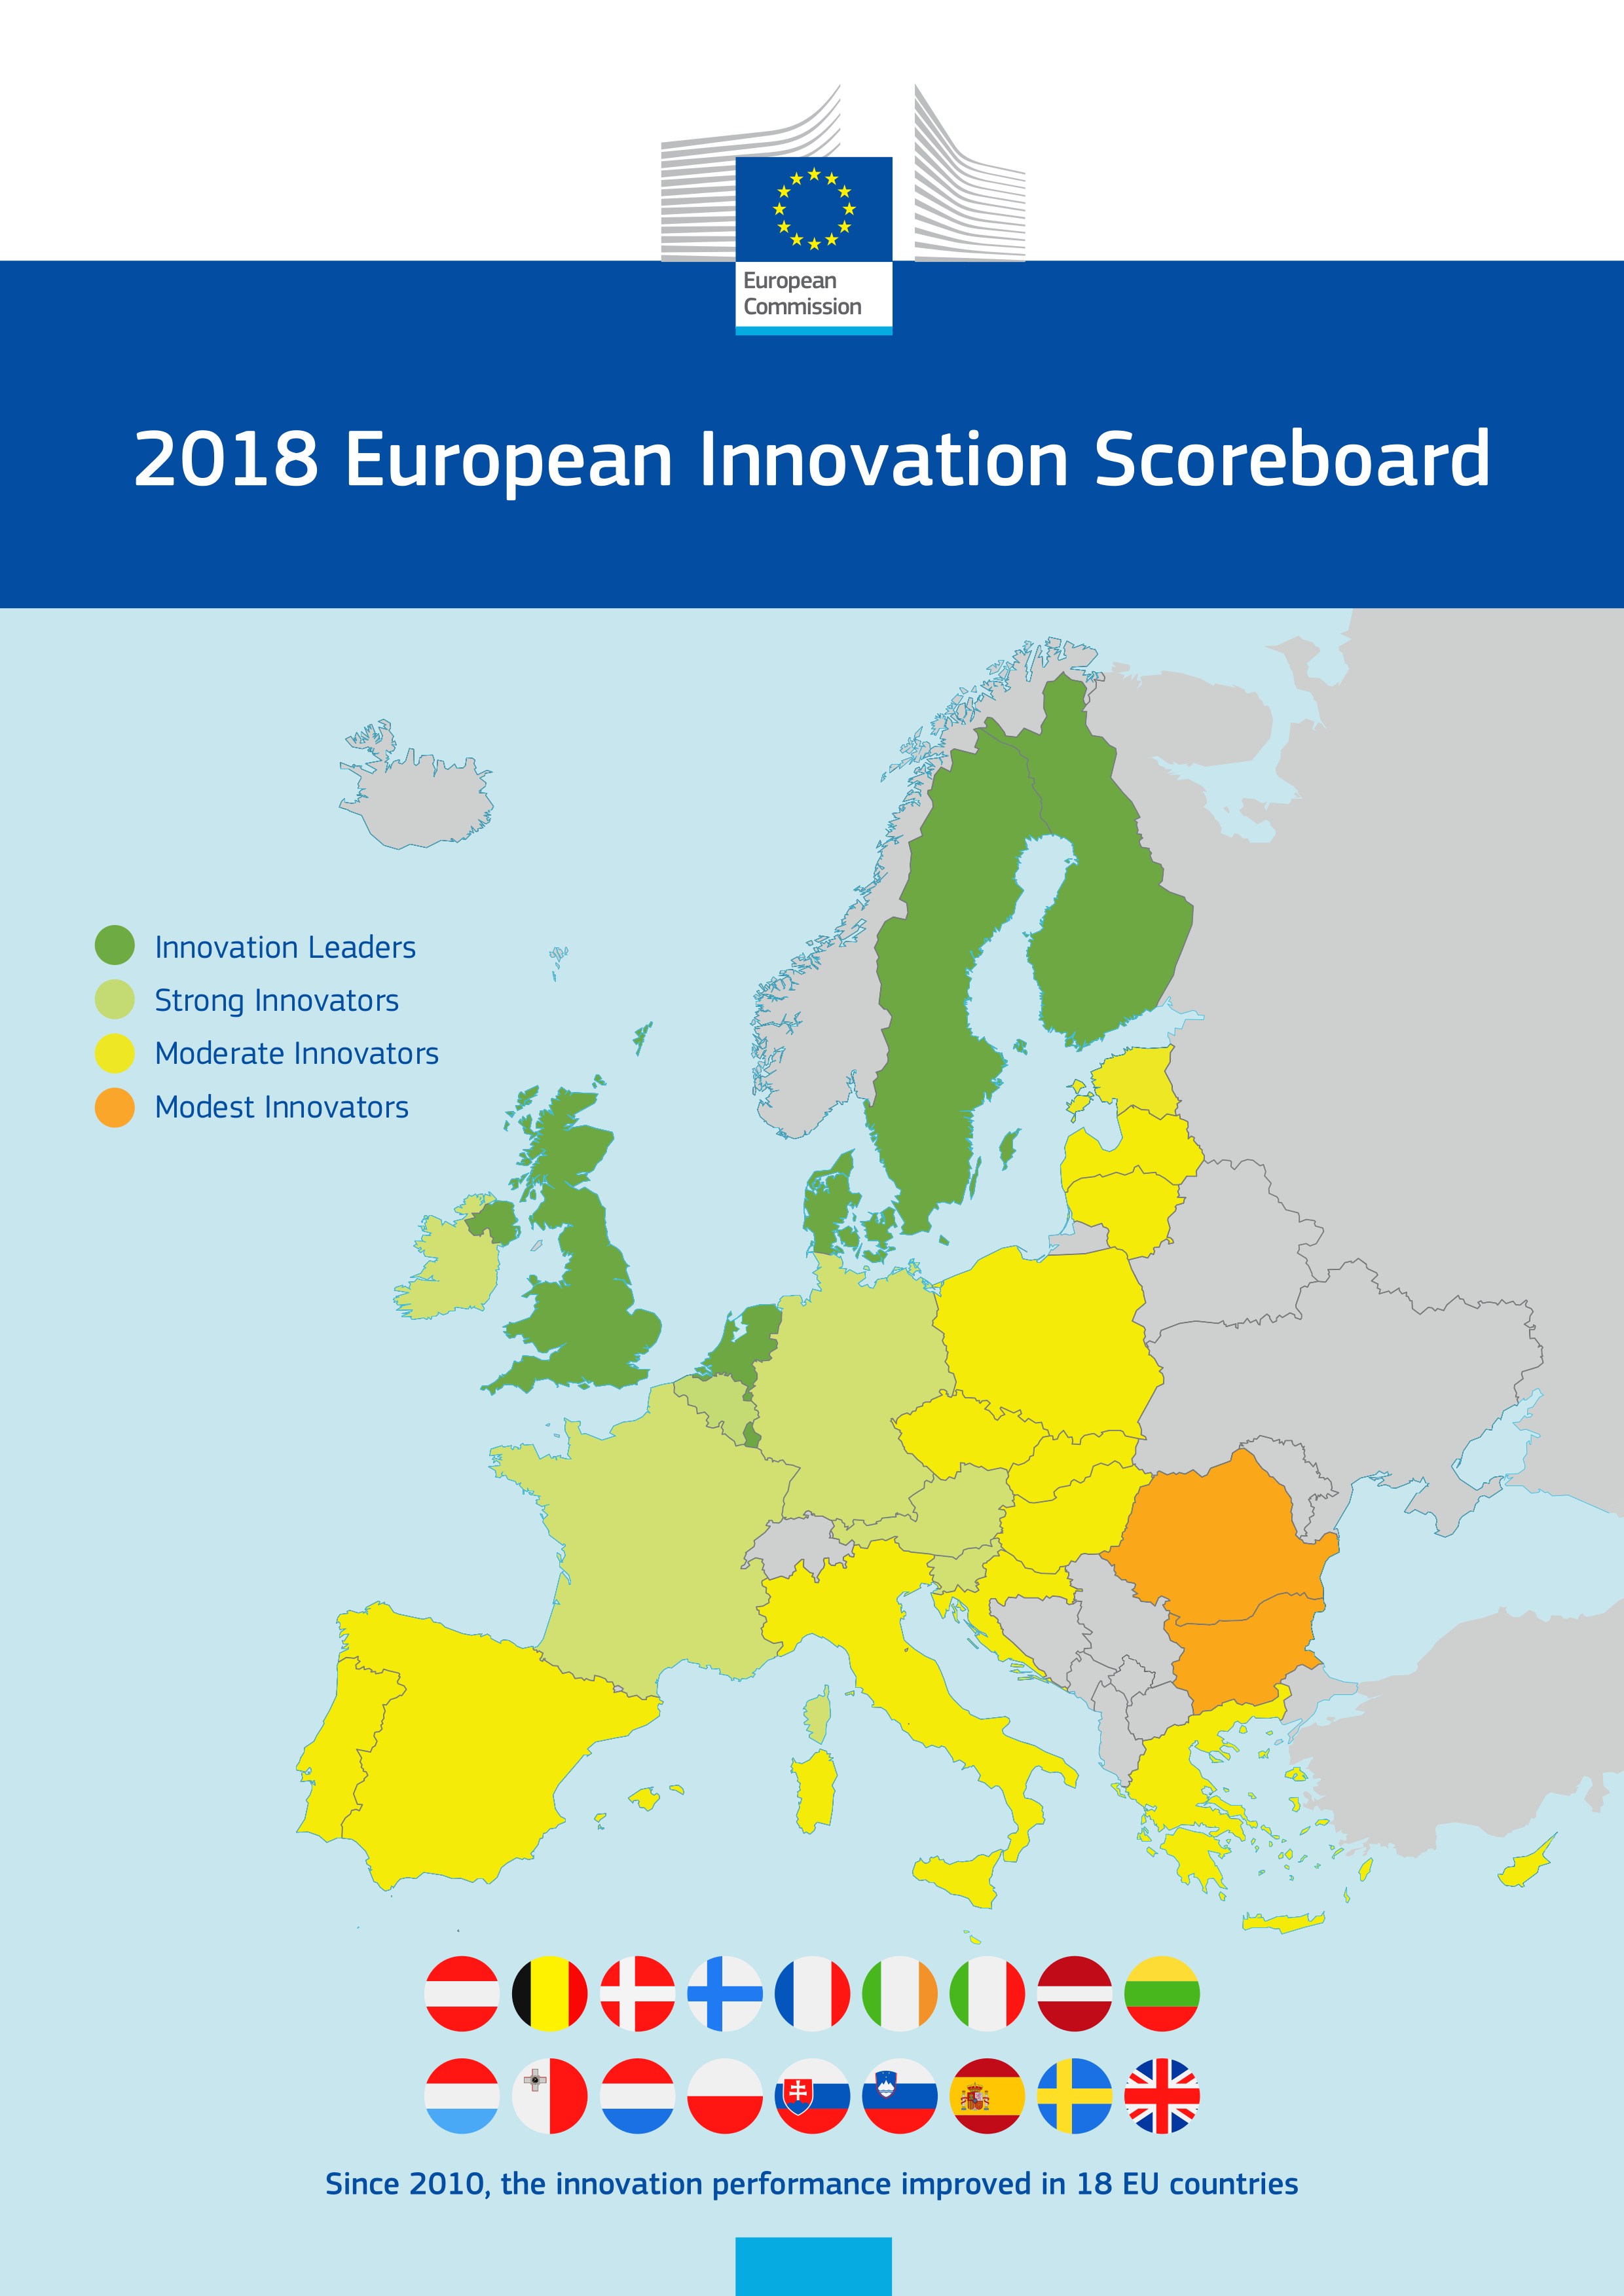 infographic-innovation-scoreboard-2018-map-full-size